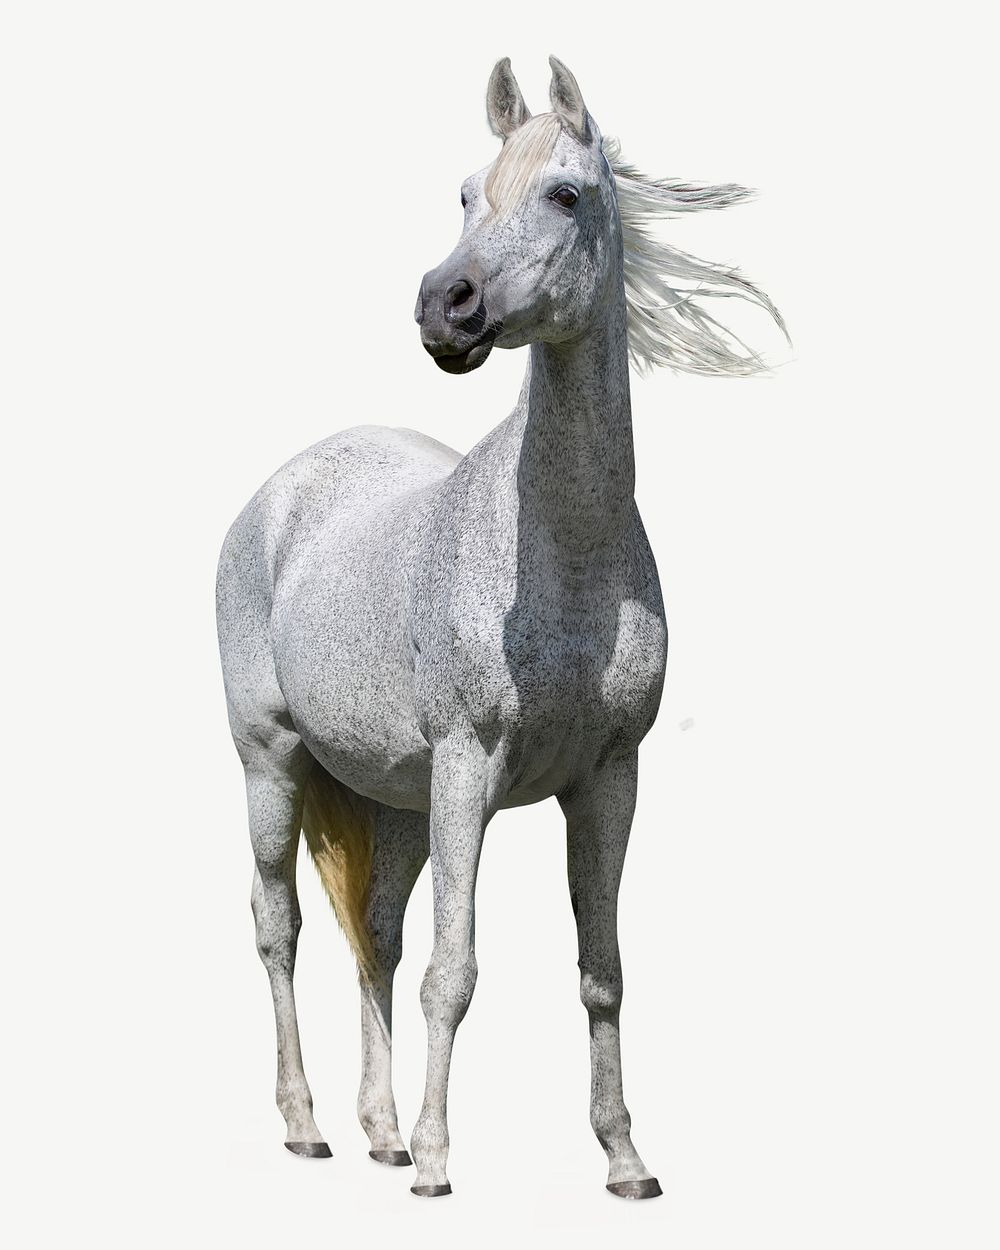 White horse, wild animal collage element psd